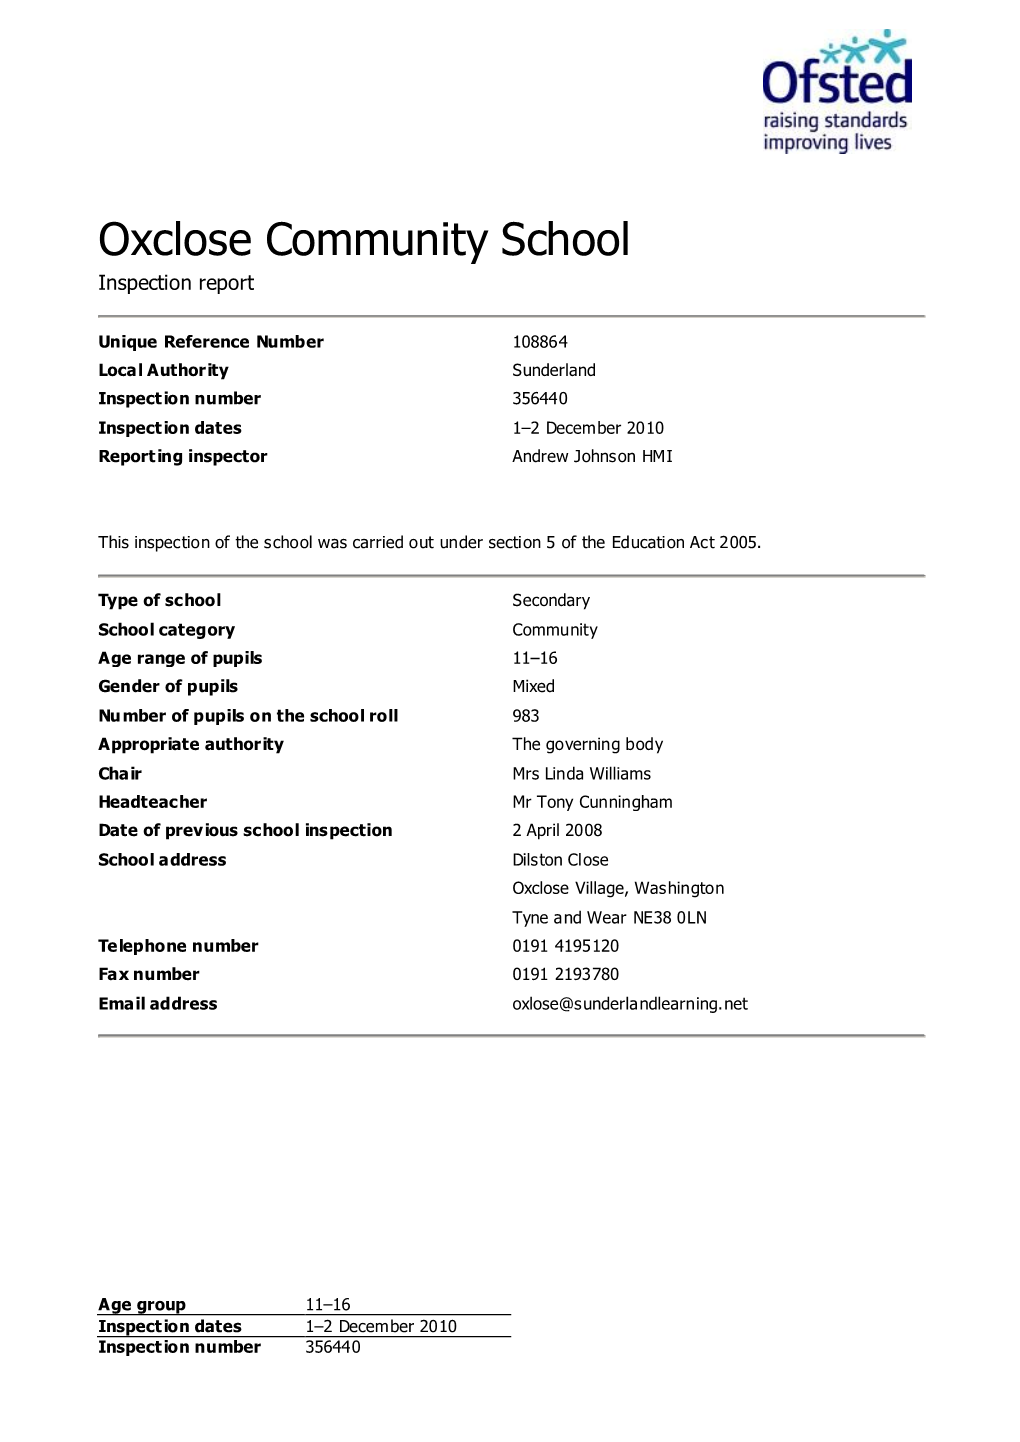 Oxclose Community School Inspection Report